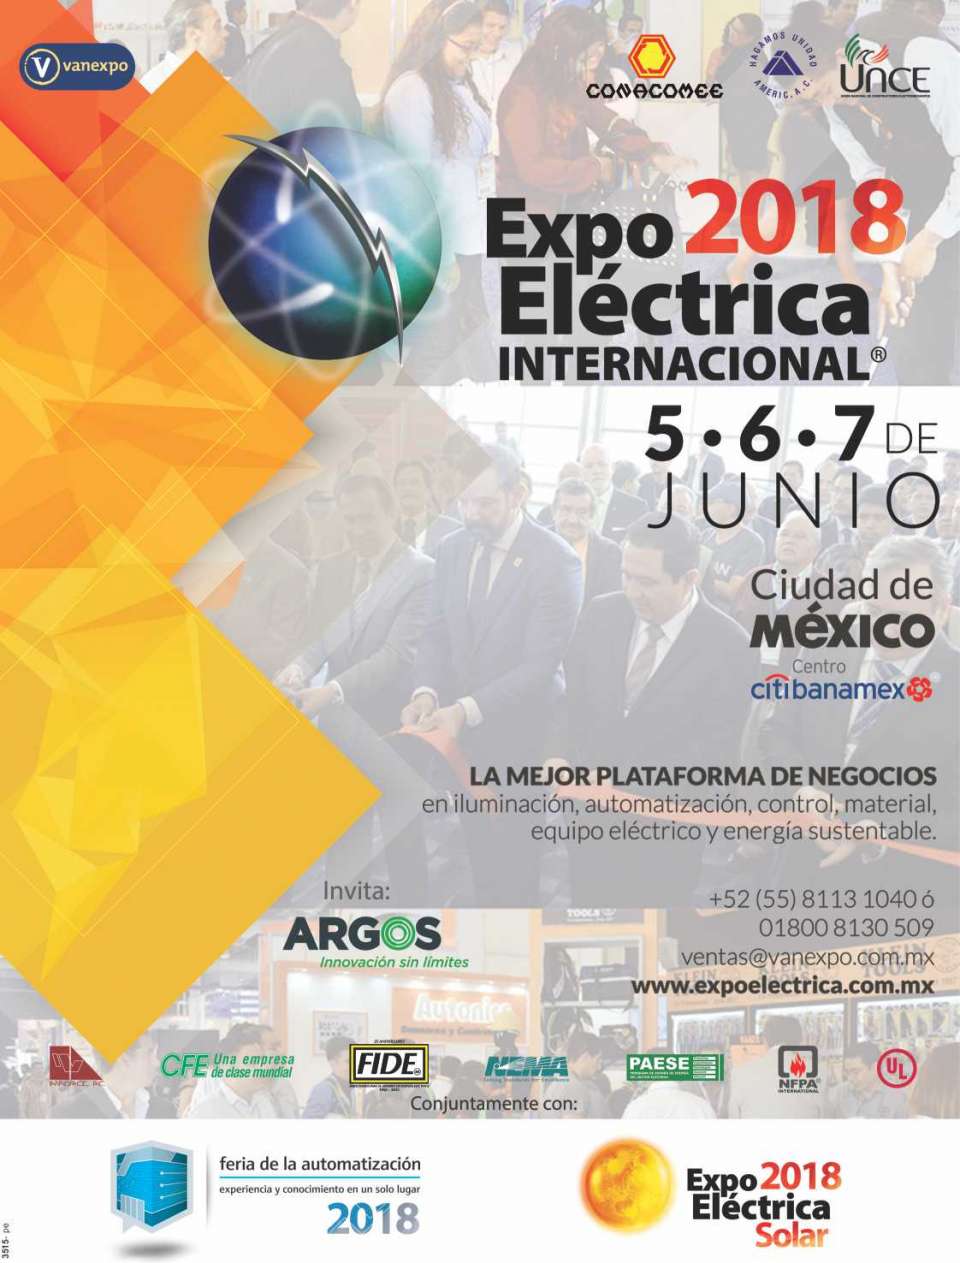 INTERNATIONAL EXPO ELECTRICA Ciudad de Mexico from June 5 to 7, 2018 in Centro Banamex